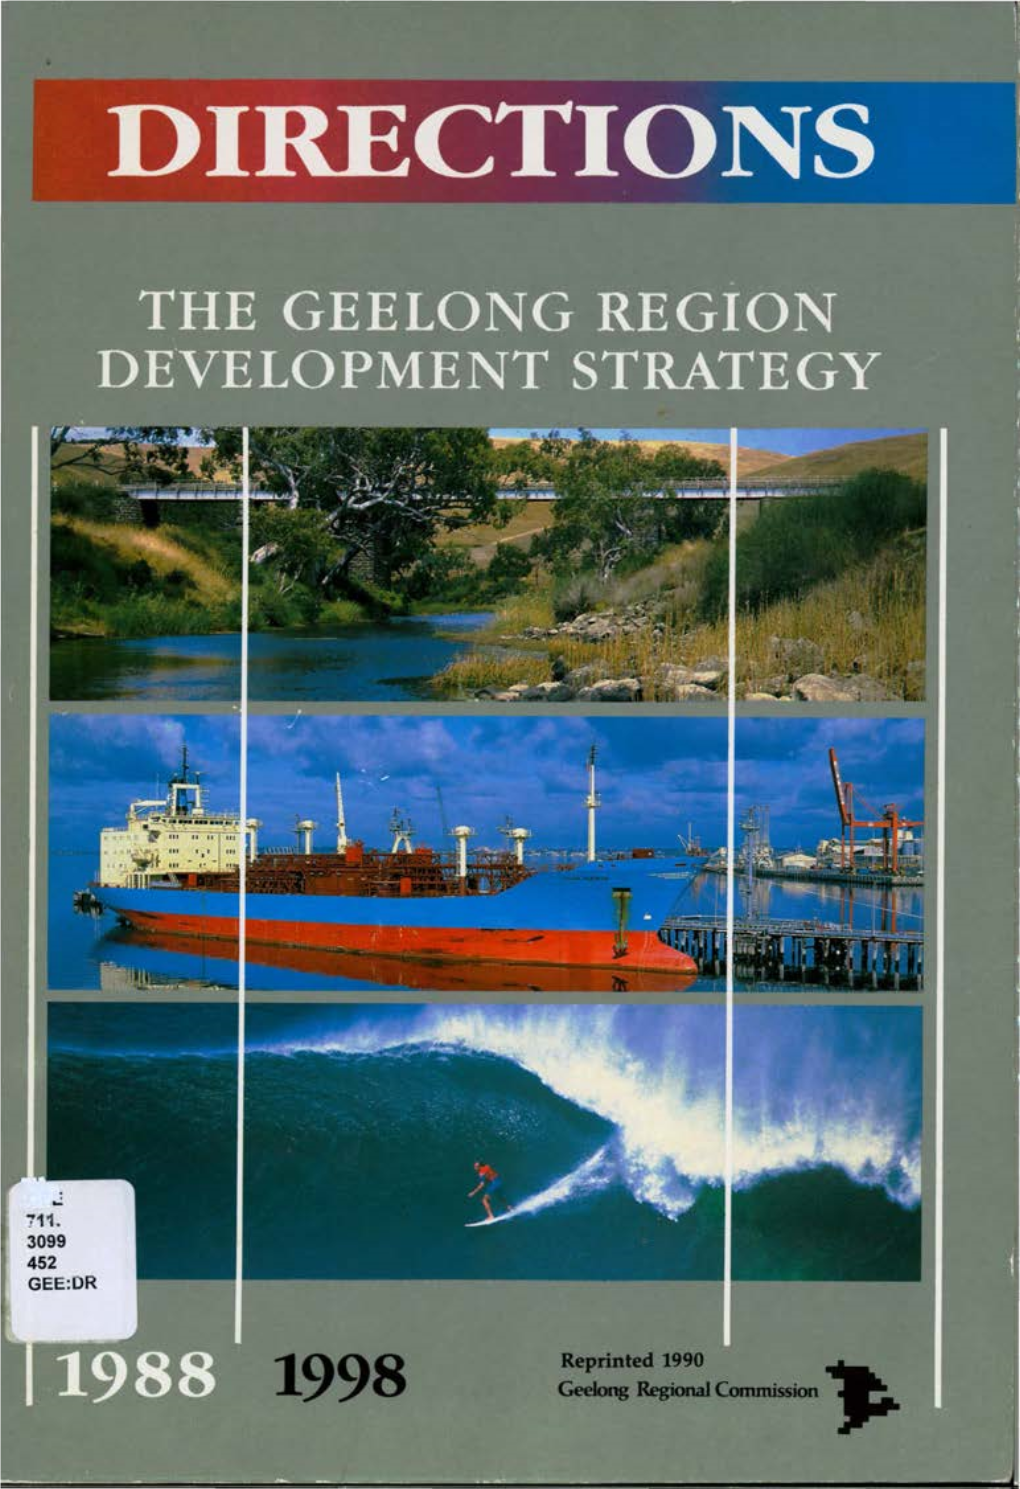 Reprinted 1990 ...Geebtg Regional Commission